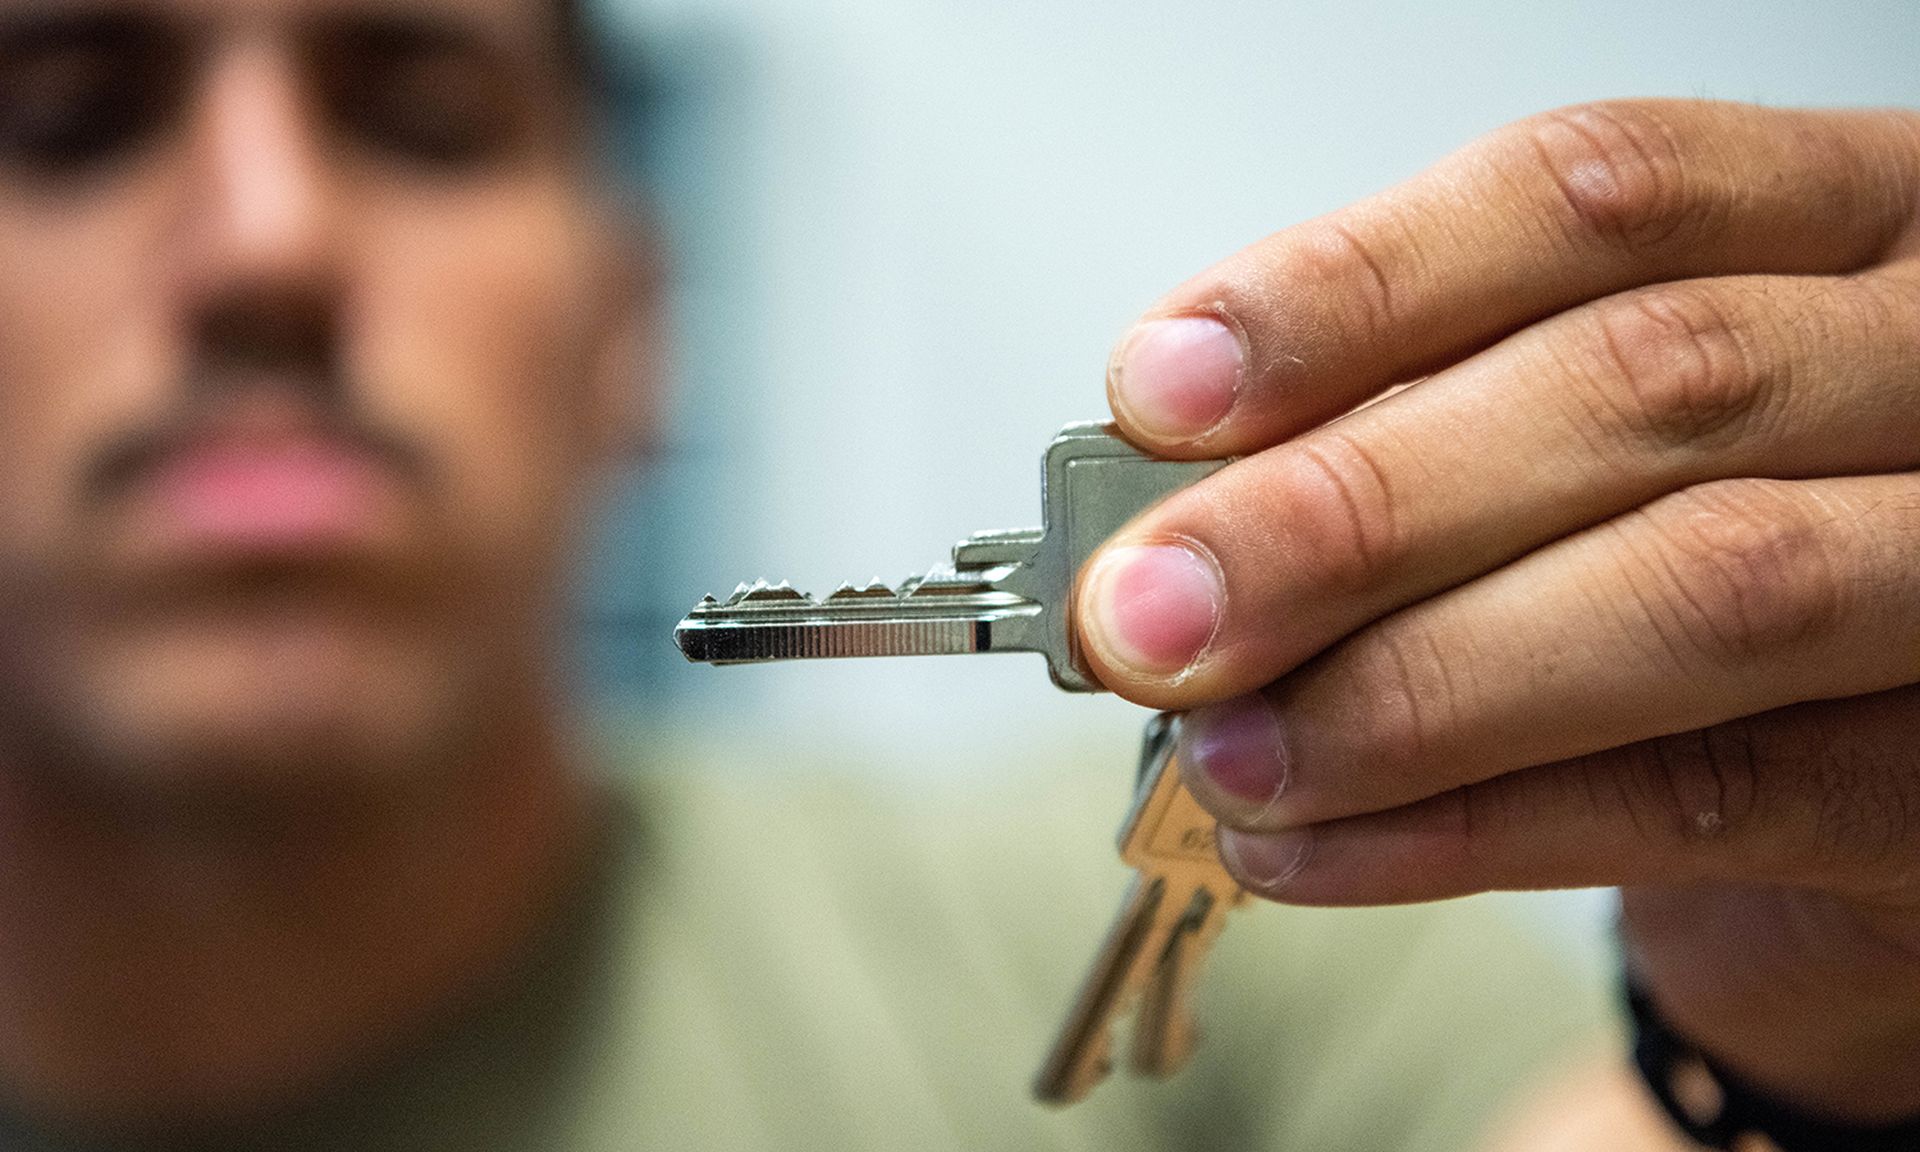 A locksmith inspects a key.